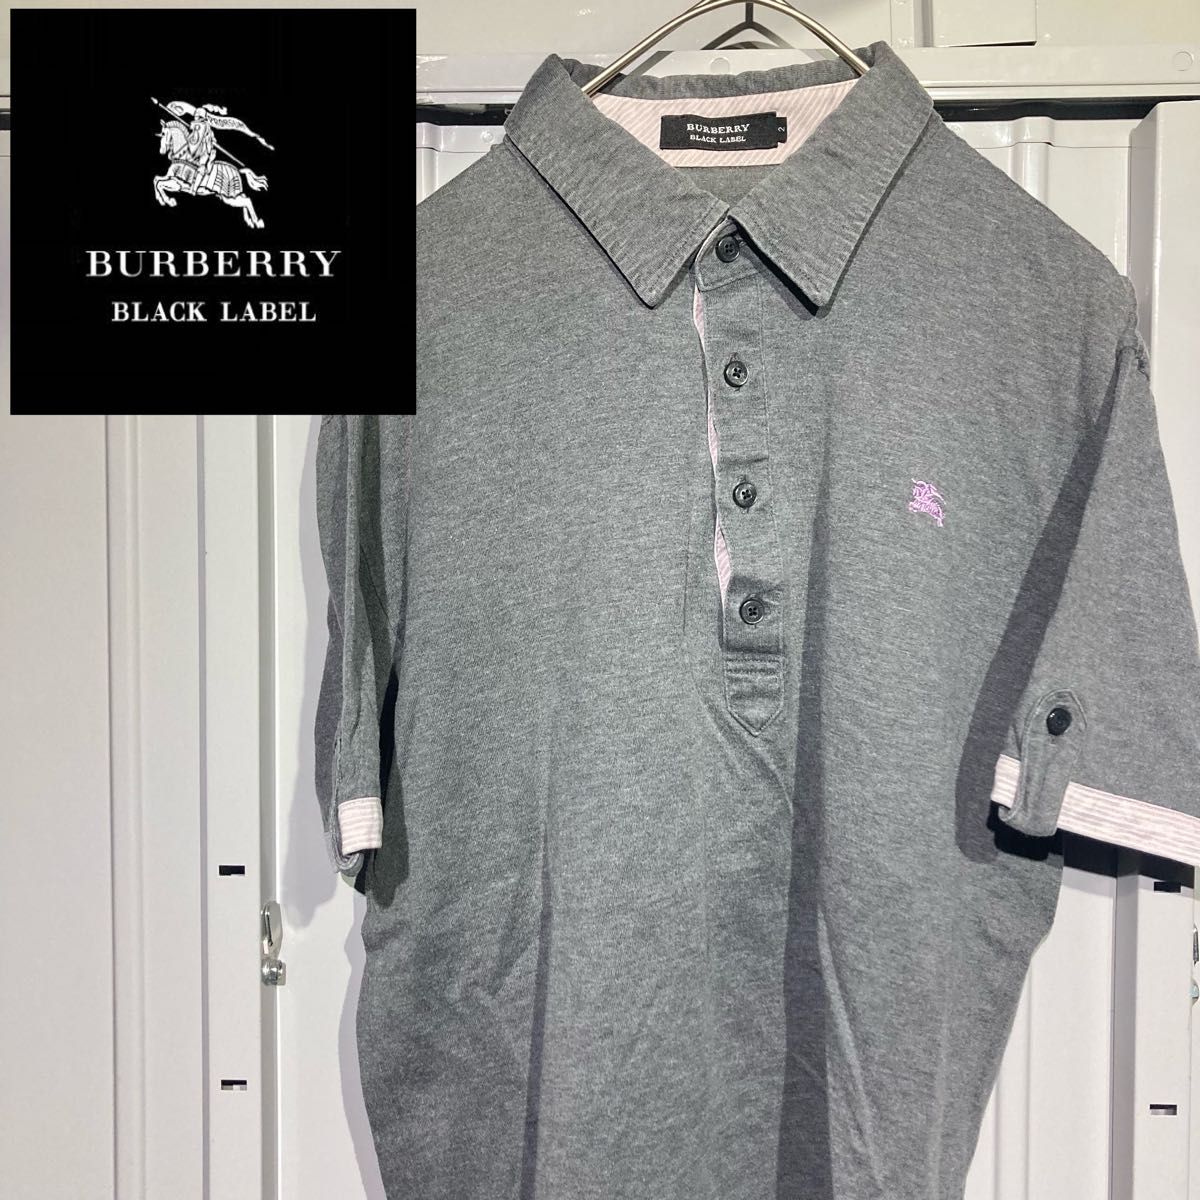 BurberryBlackLabel バーバリーブラックレーベル 襟付き 半袖ポロシャツ ワンポイントホース刺繍ロゴ グレー 2 